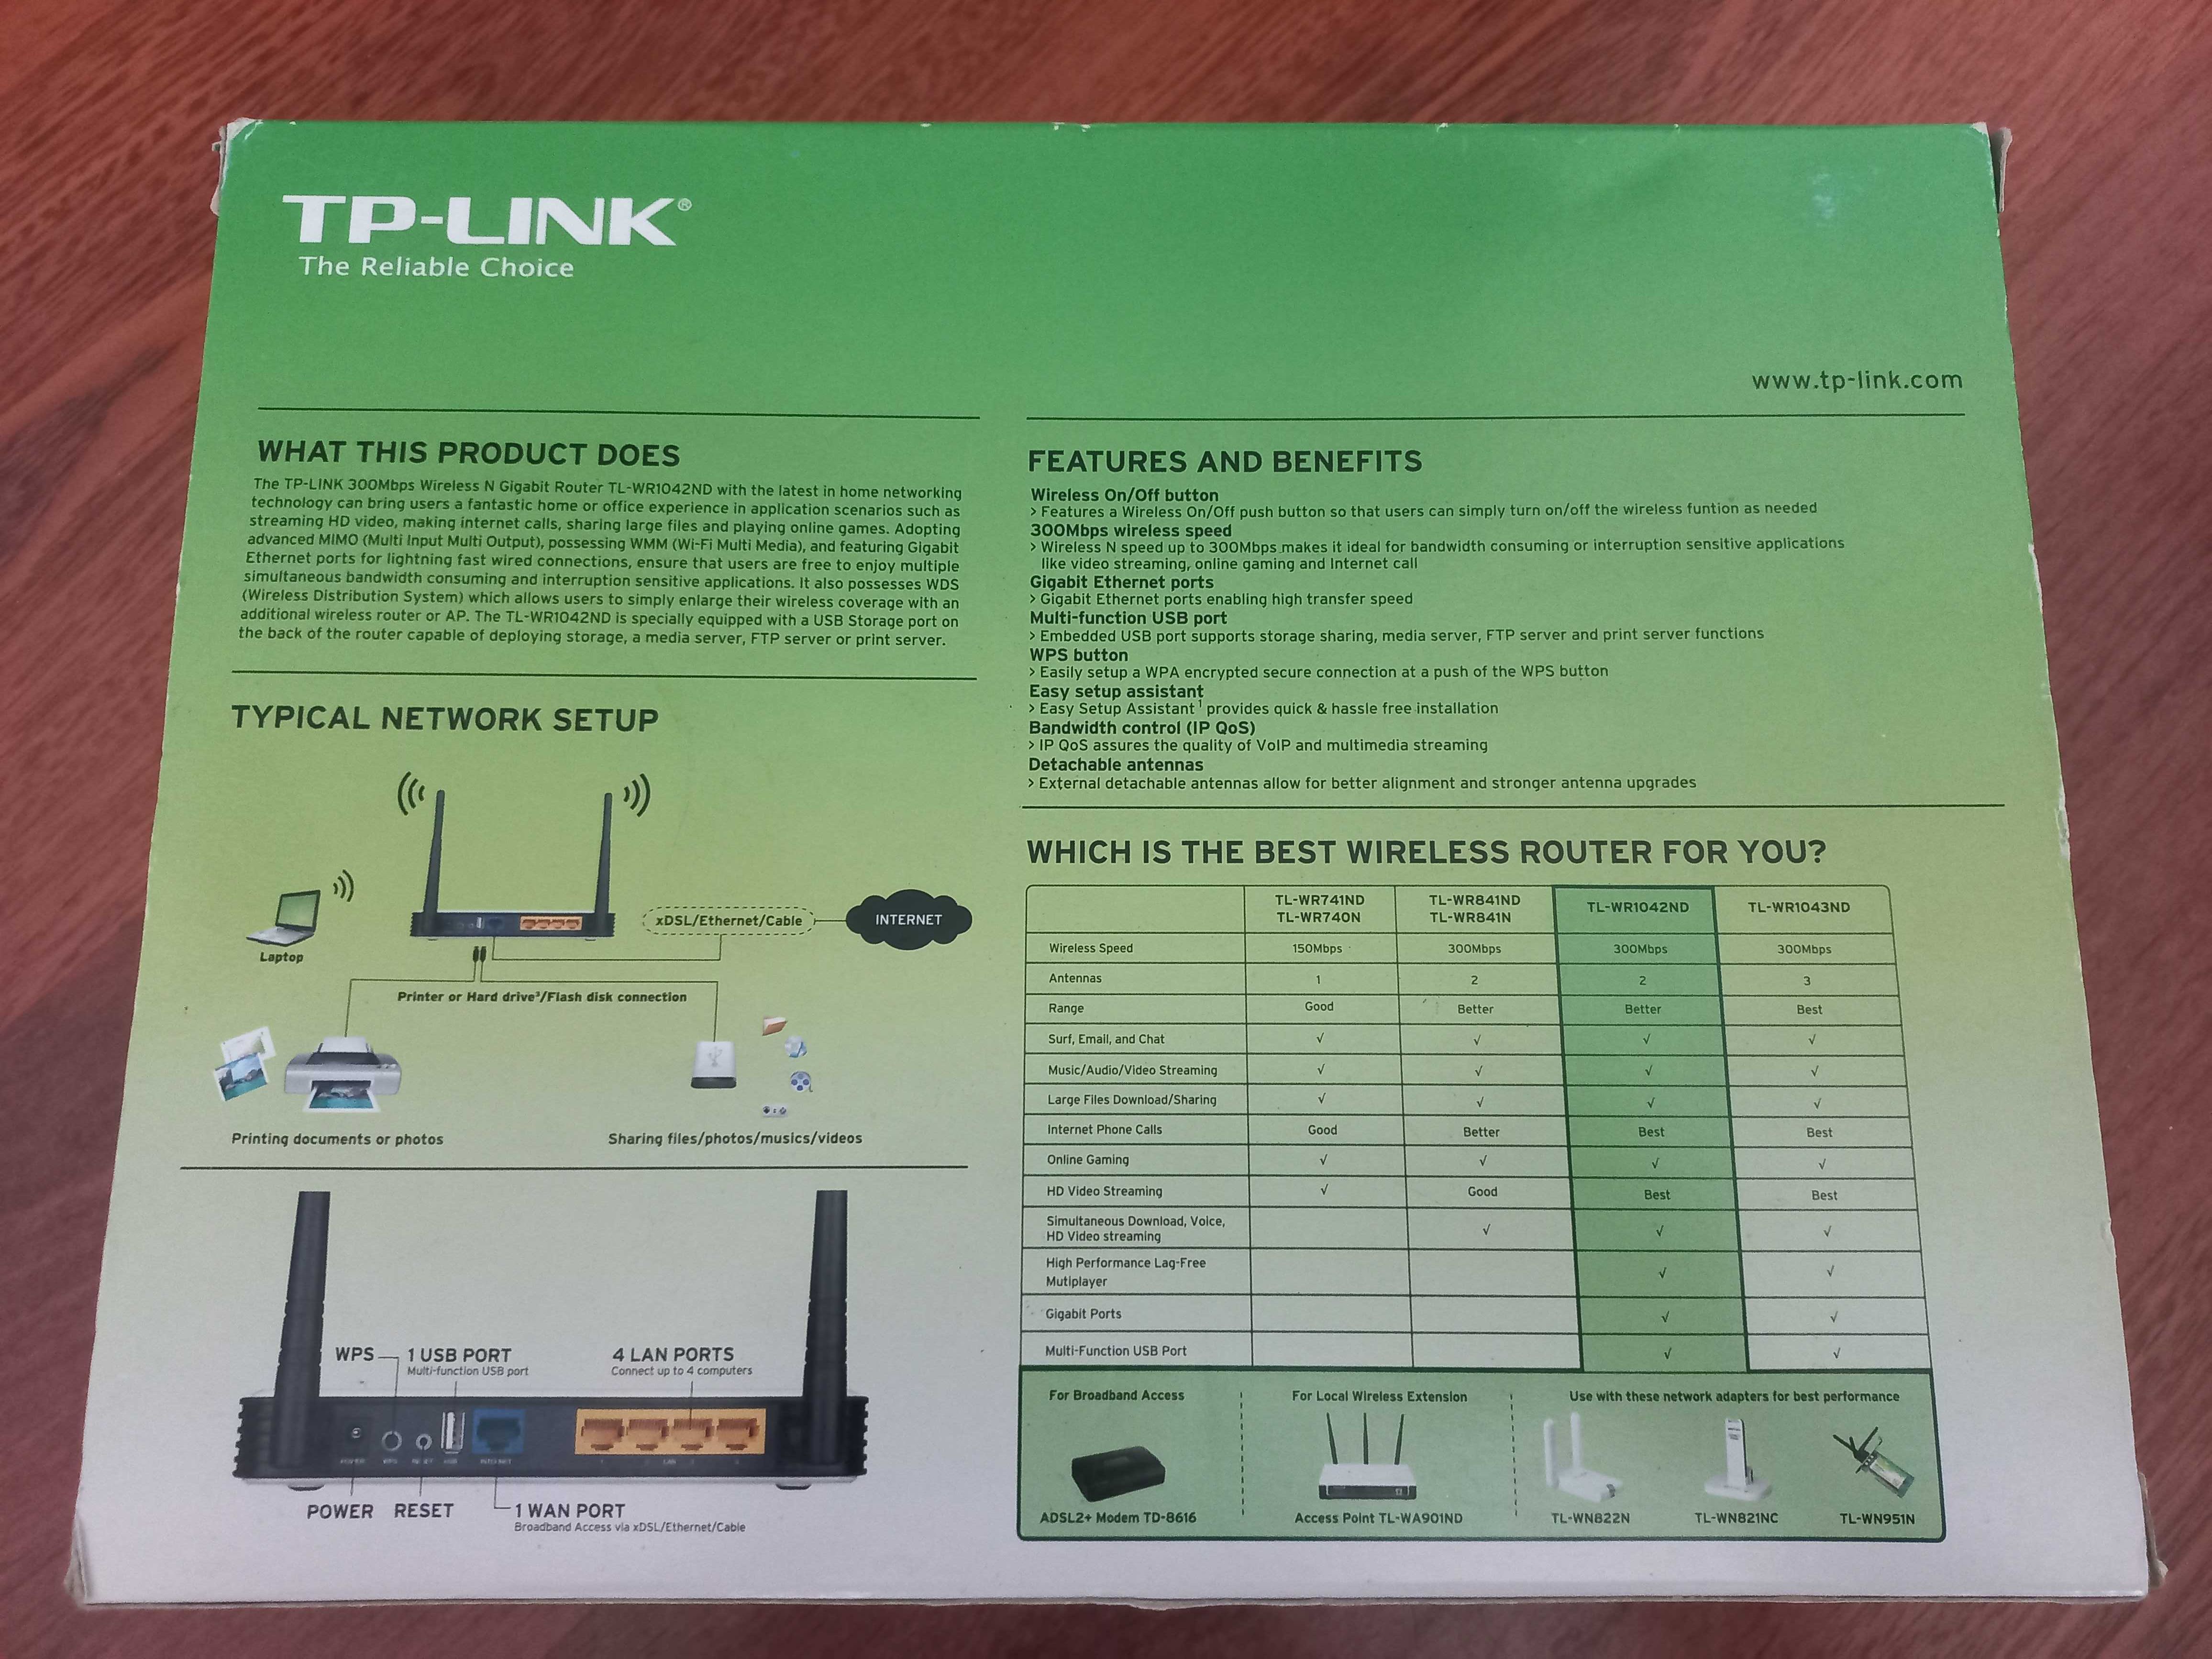 Tp-Link Router, model TL-WR1042ND